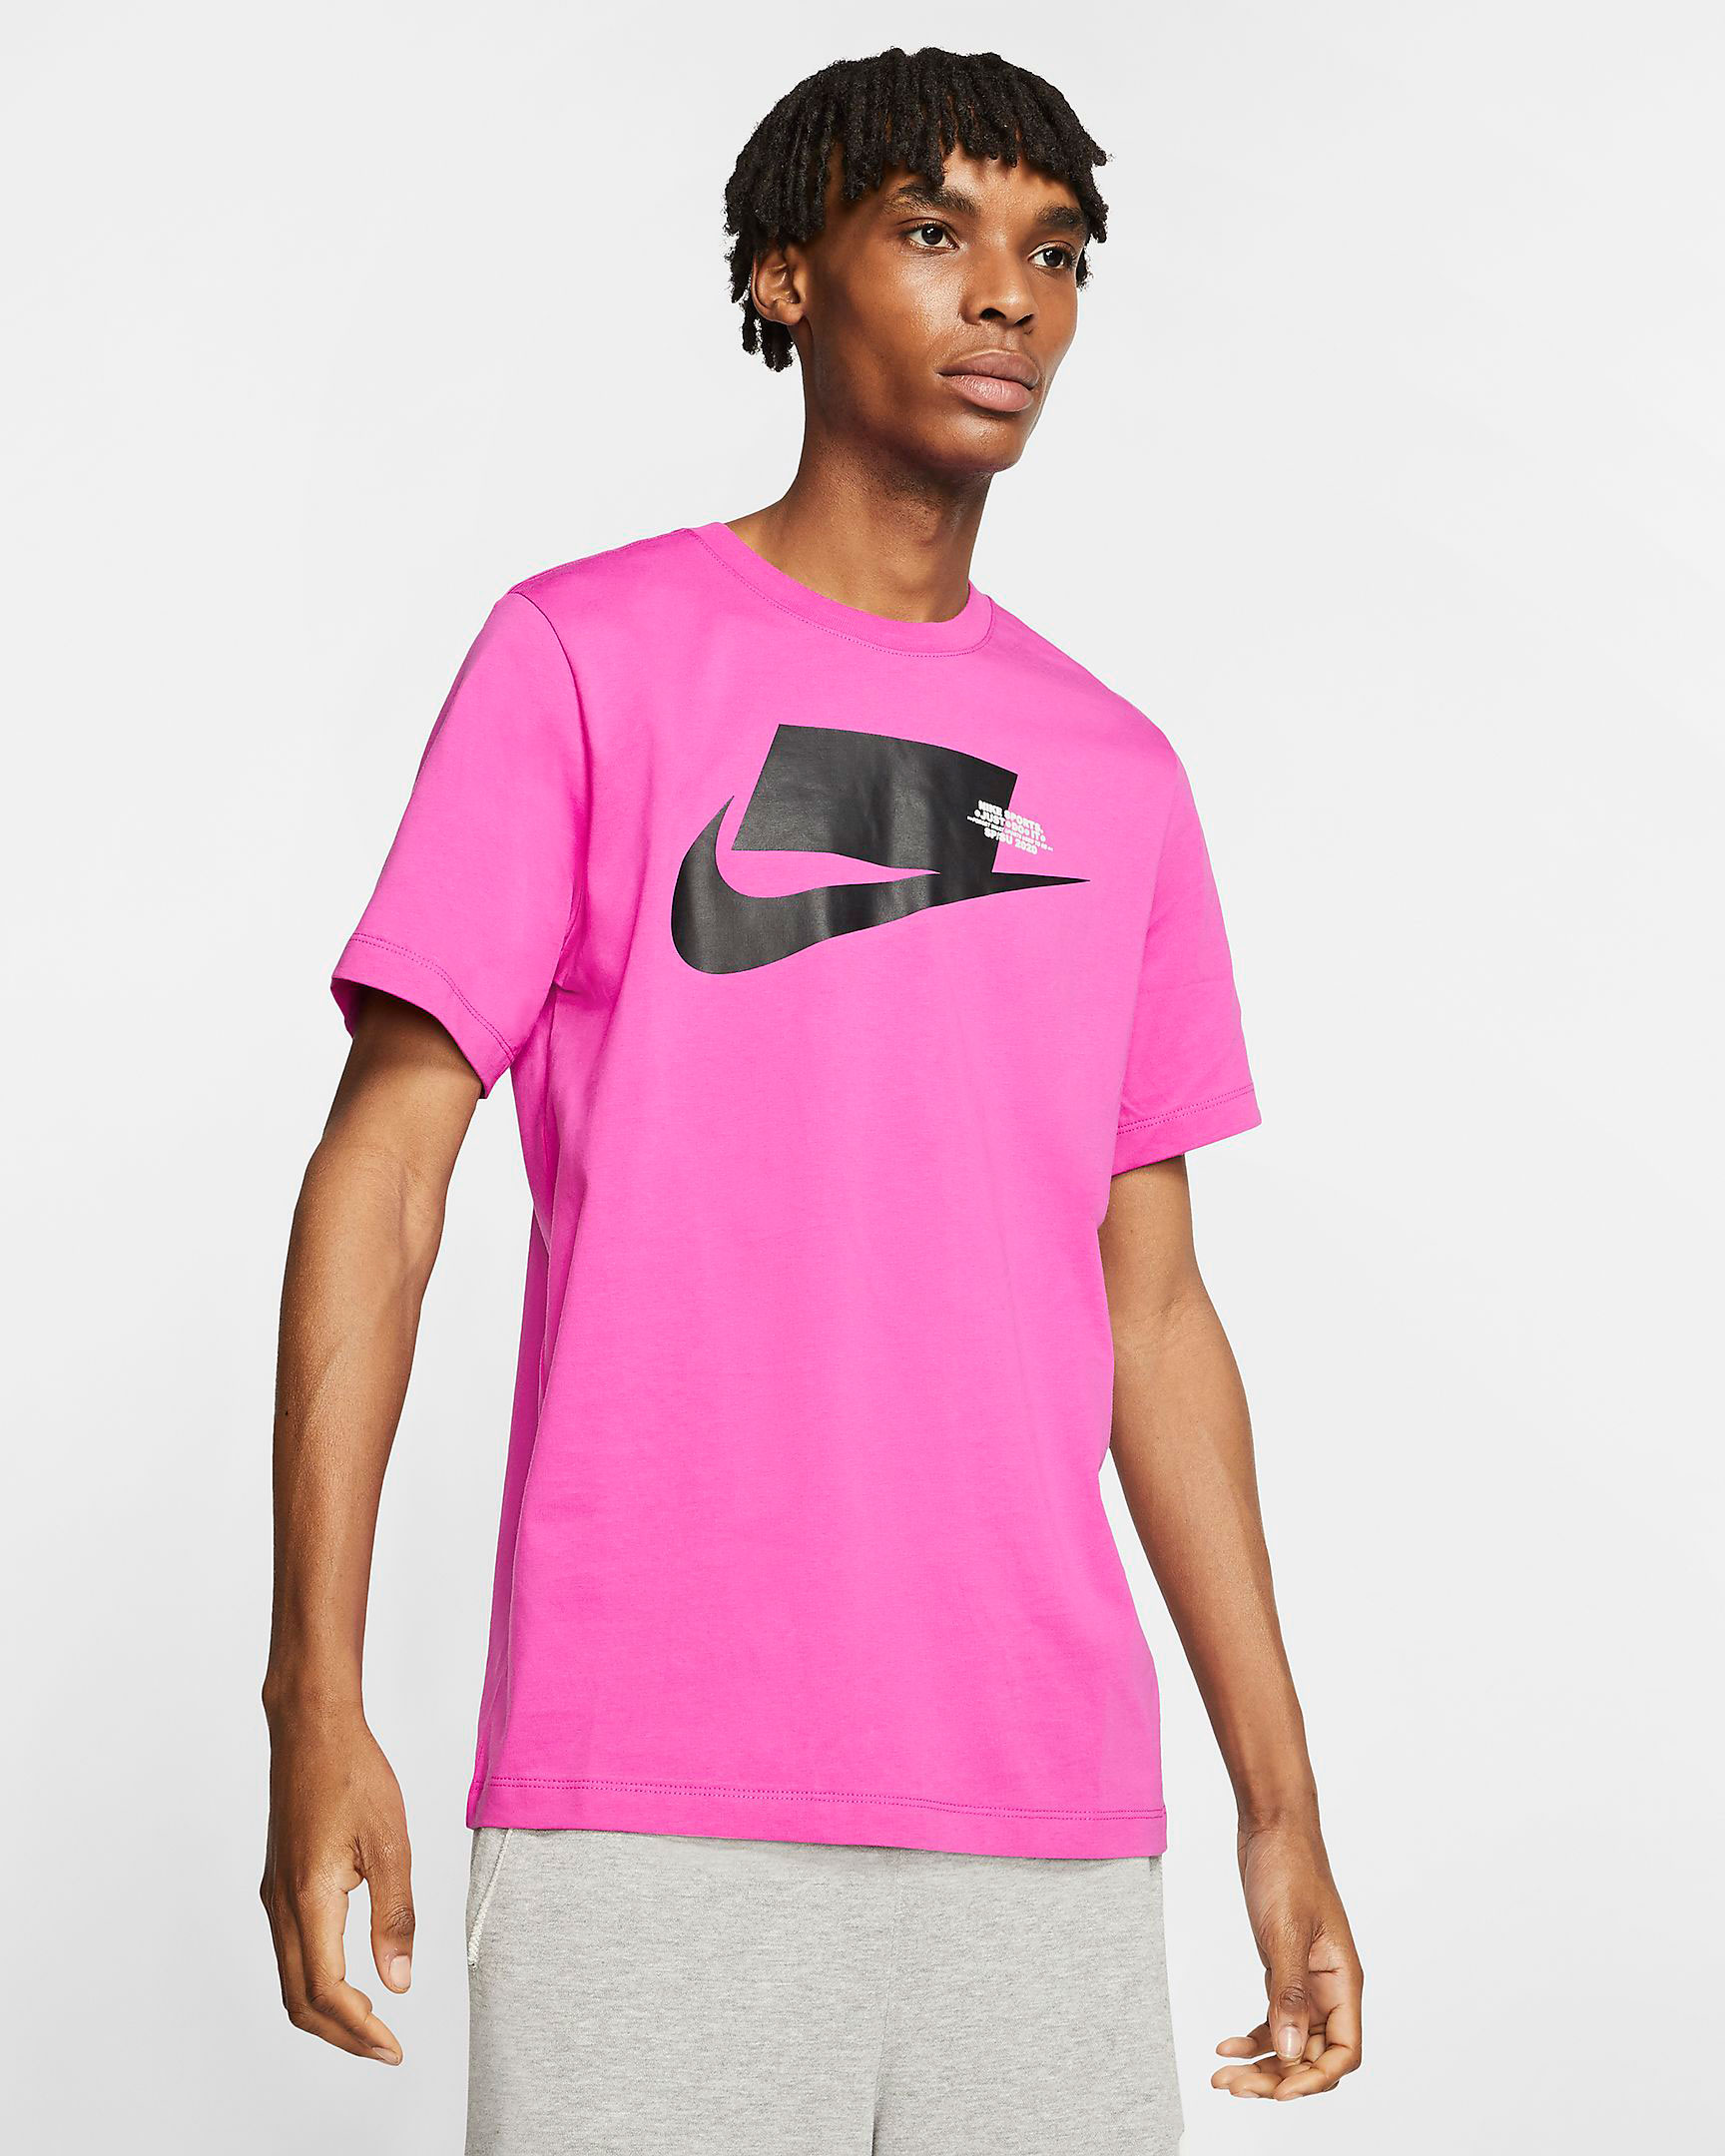 Nike Air Max 90 Rose Pink Clothing 